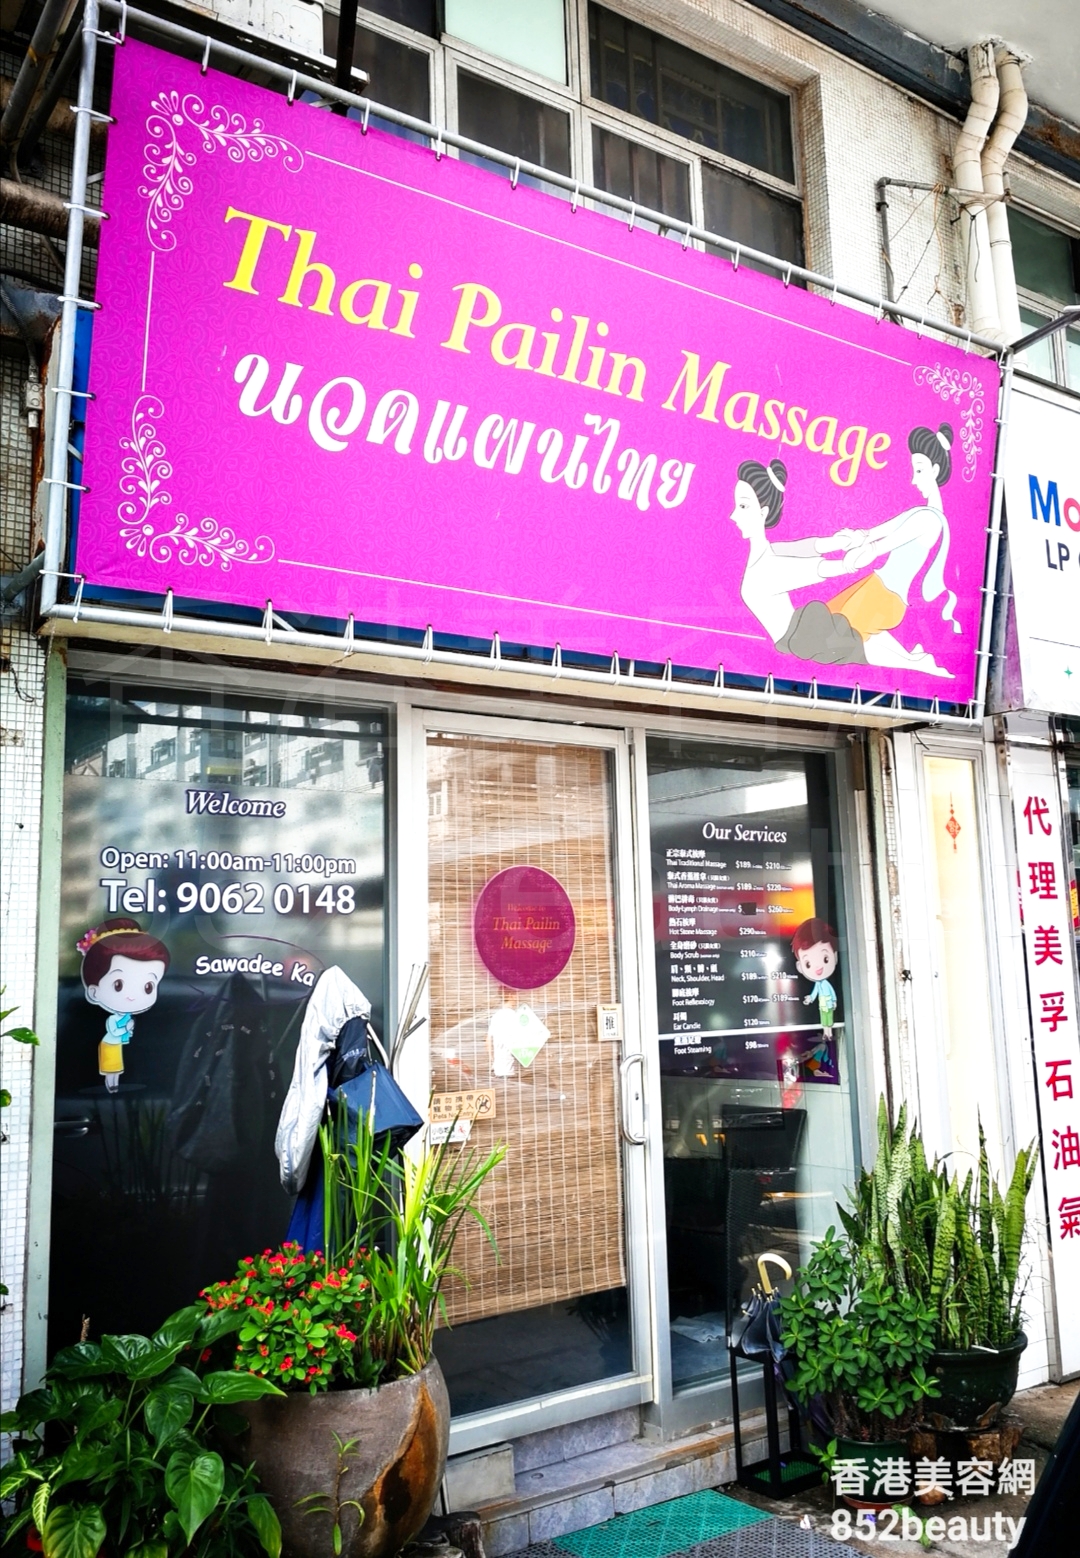 香港美容網 Hong Kong Beauty Salon 美容院 / 美容師: Thai Pailin Massage